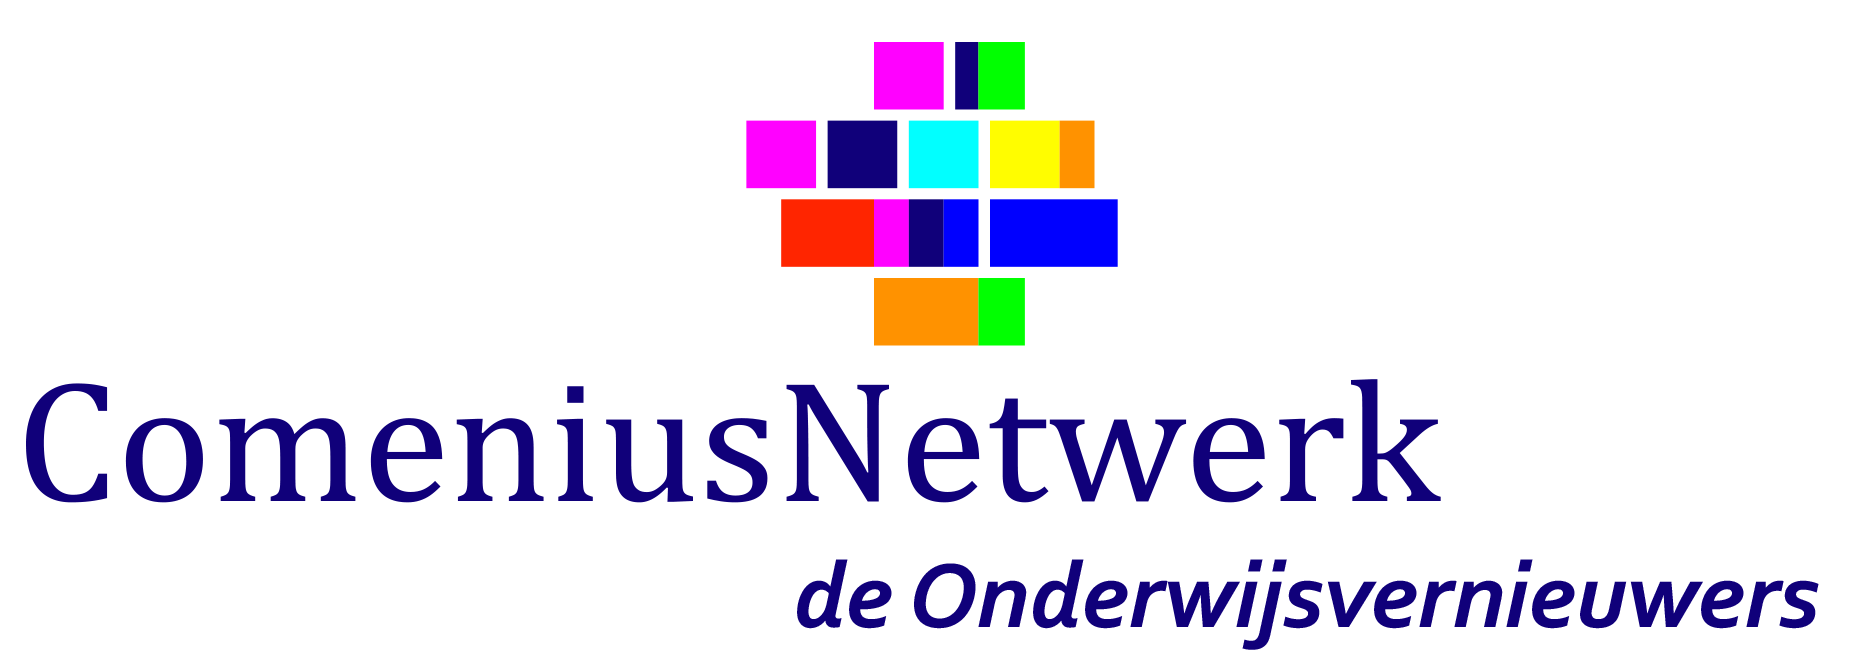 ComeniusNetwerk logo